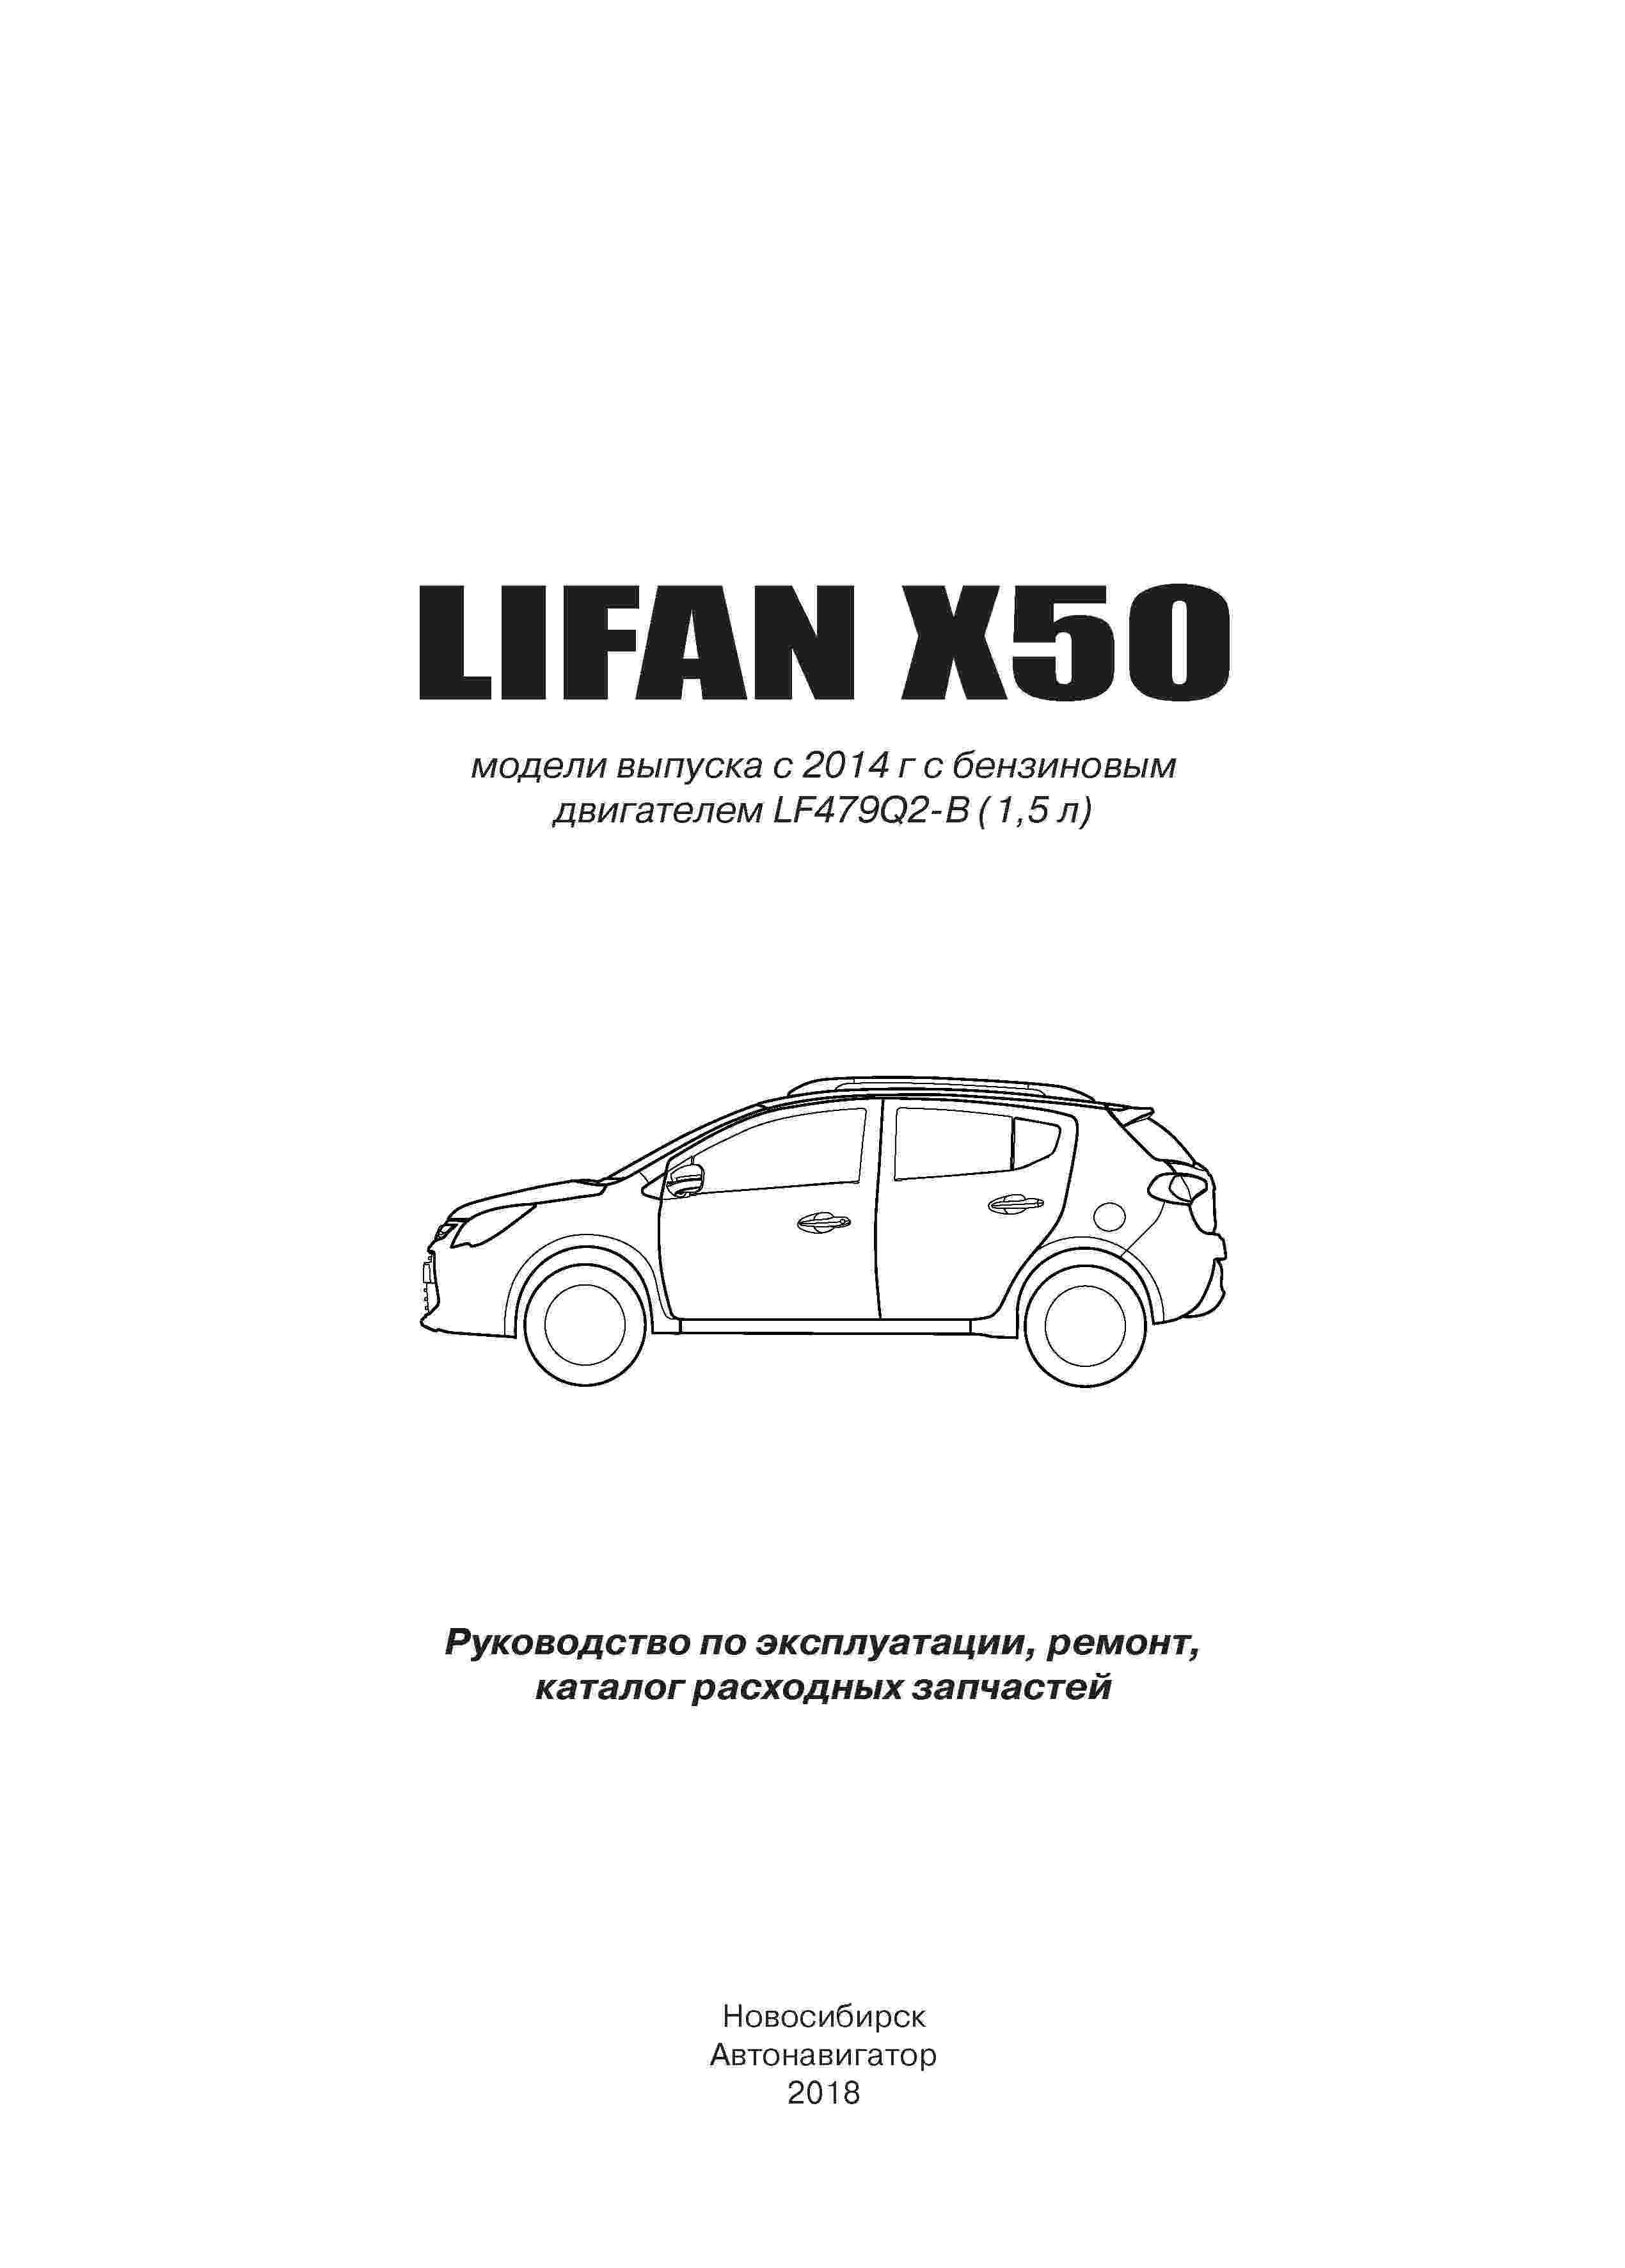 Книга: LIFAN X50 (б) с 2014 г.в. рем., экспл., то | Автонавигатор